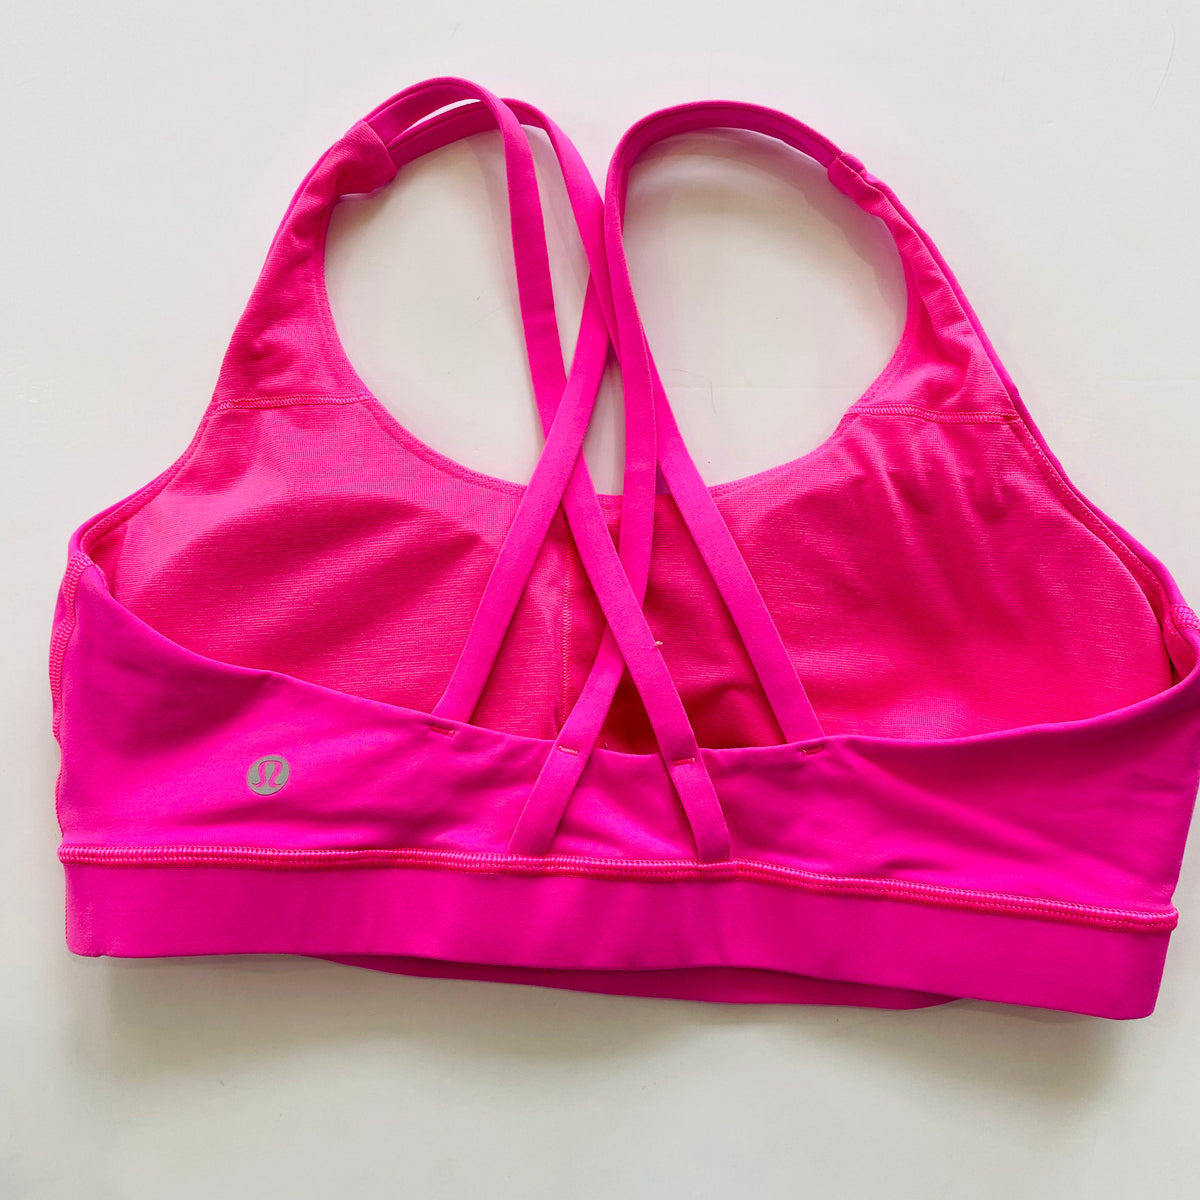 Lululemon Lulu Sports Bra Pink Size 14 - $18 (62% Off Retail